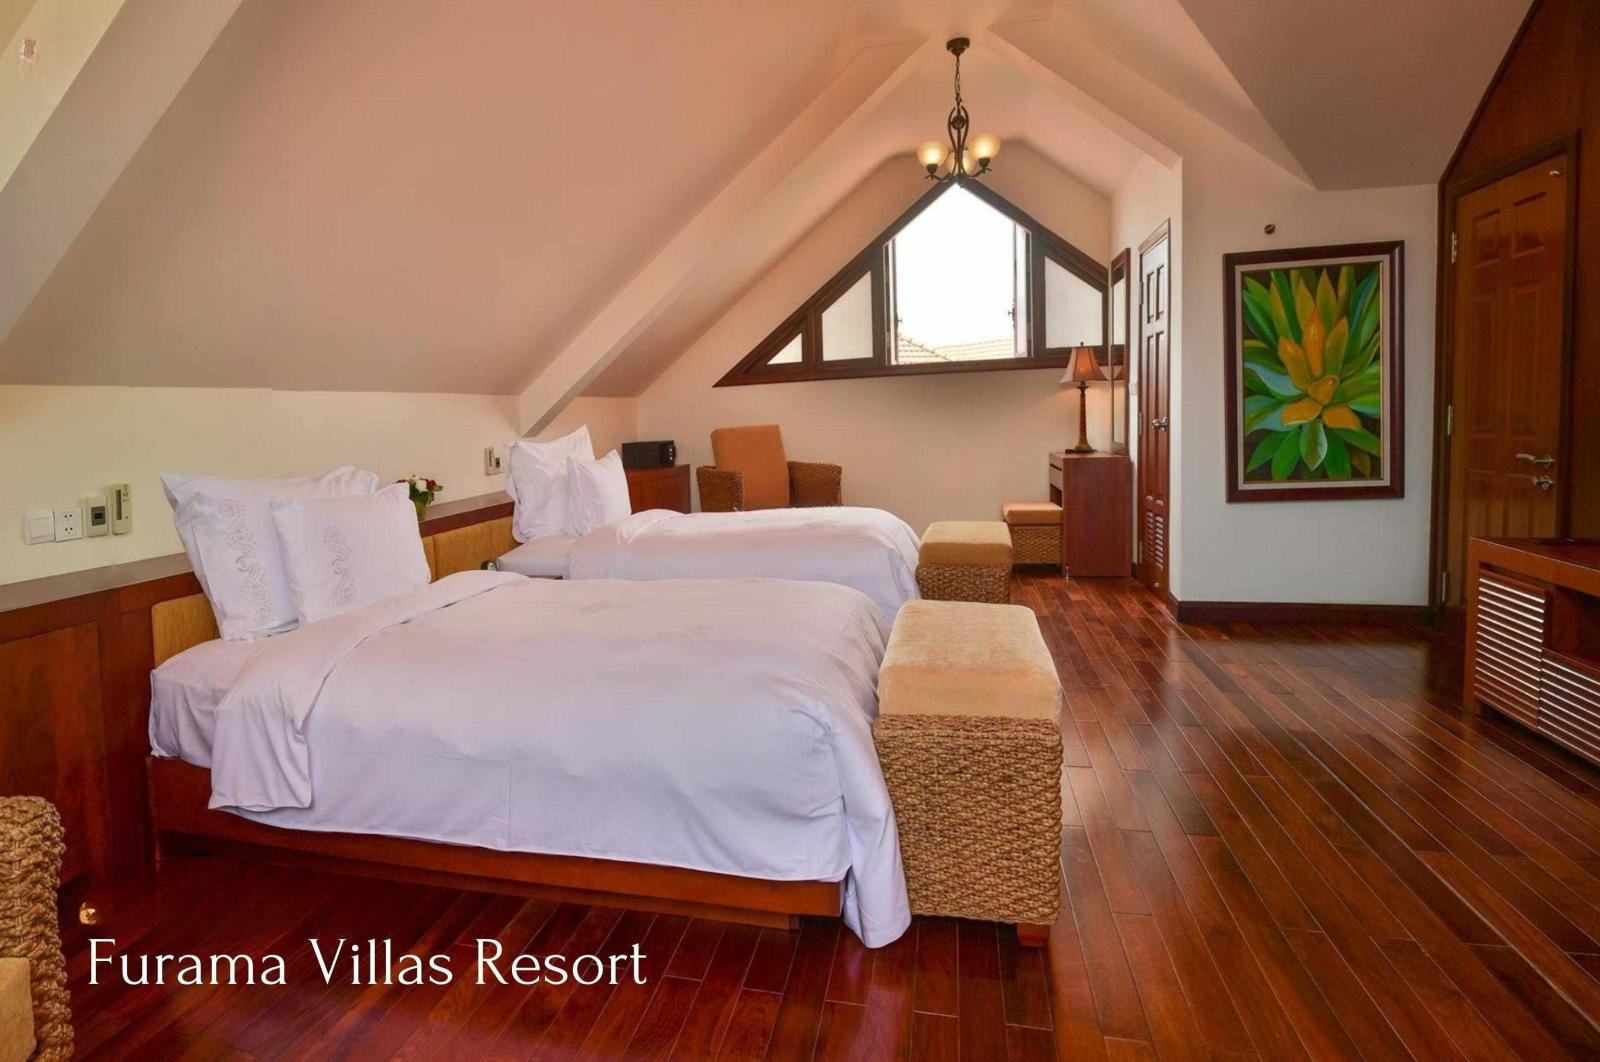 Furama 3 bedroom villa for sale, lowest price.